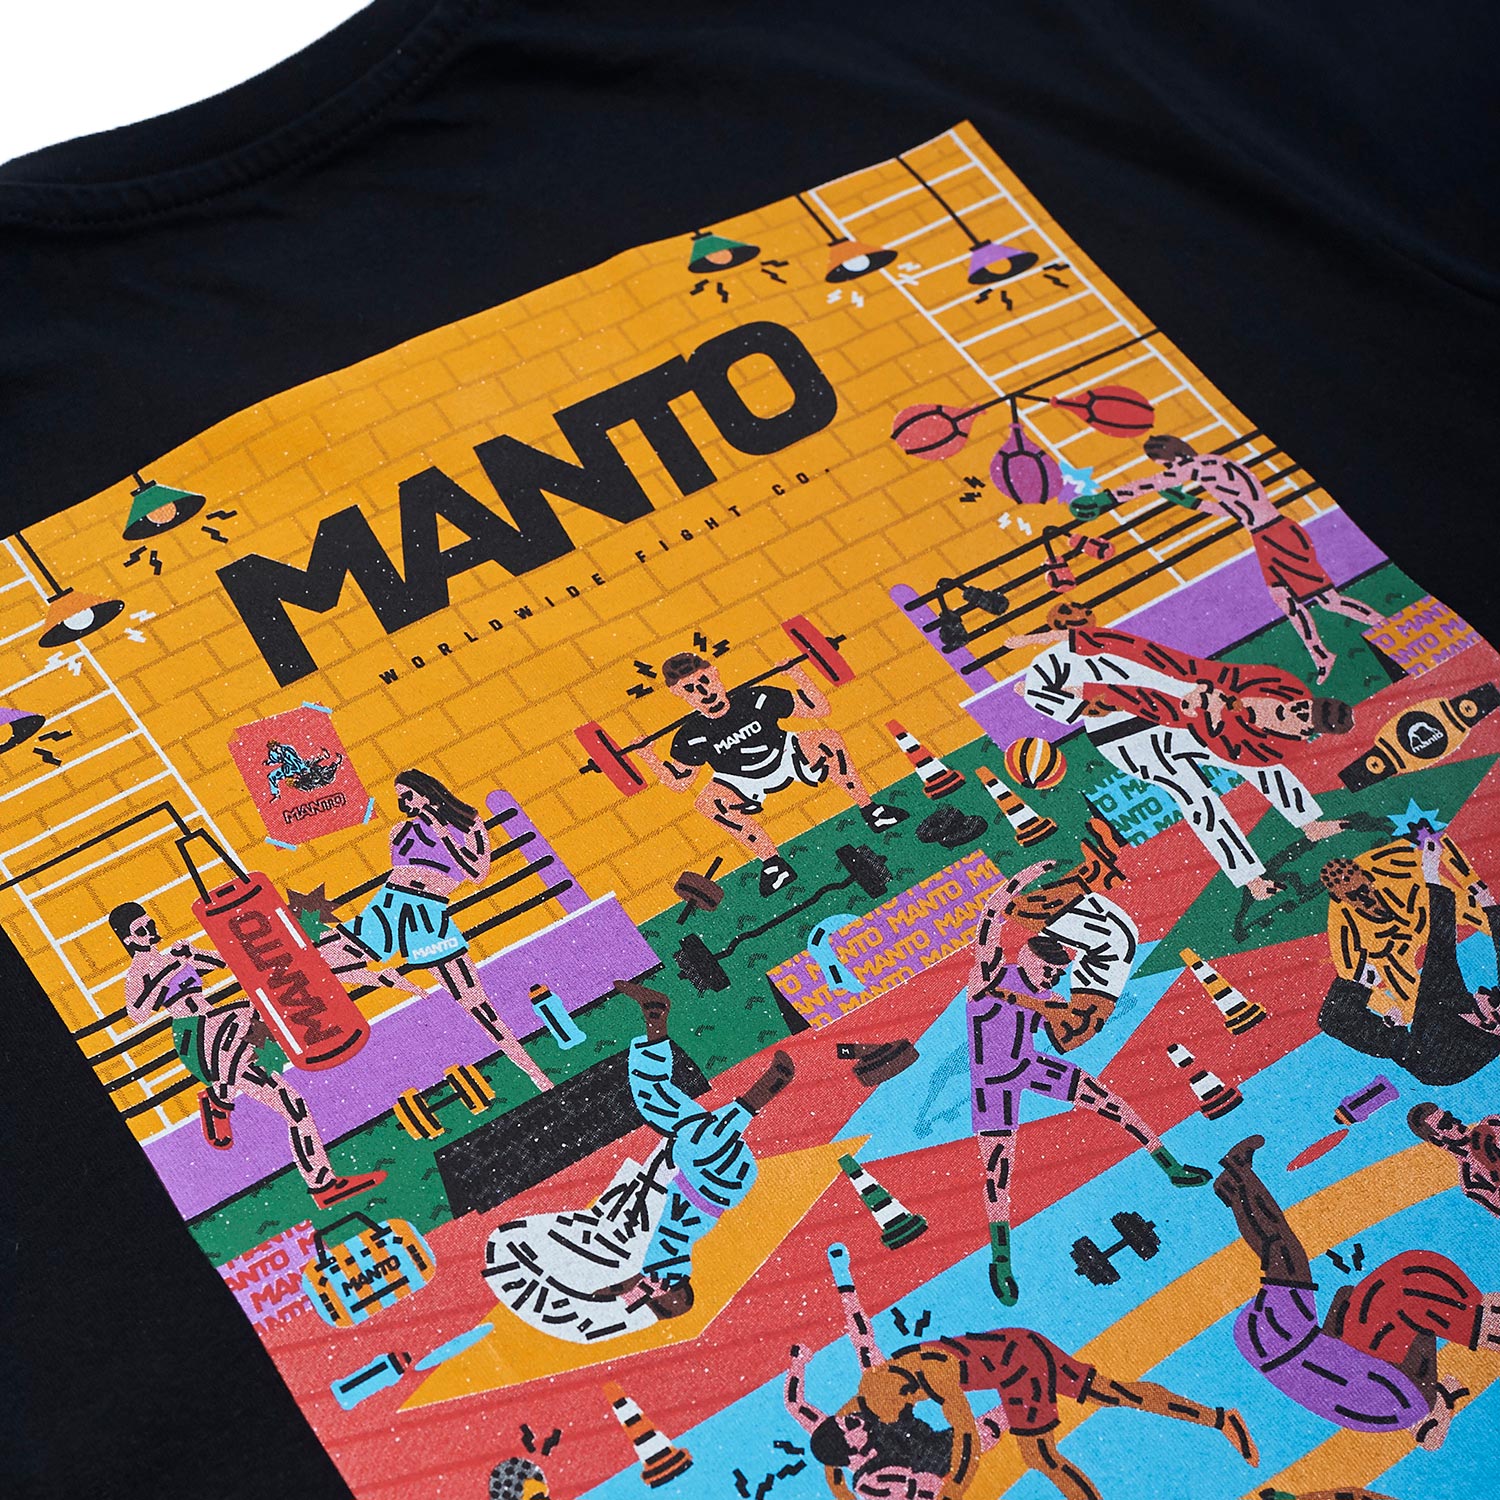 Koszulka T-shirt Manto Gym 2.0 - Black